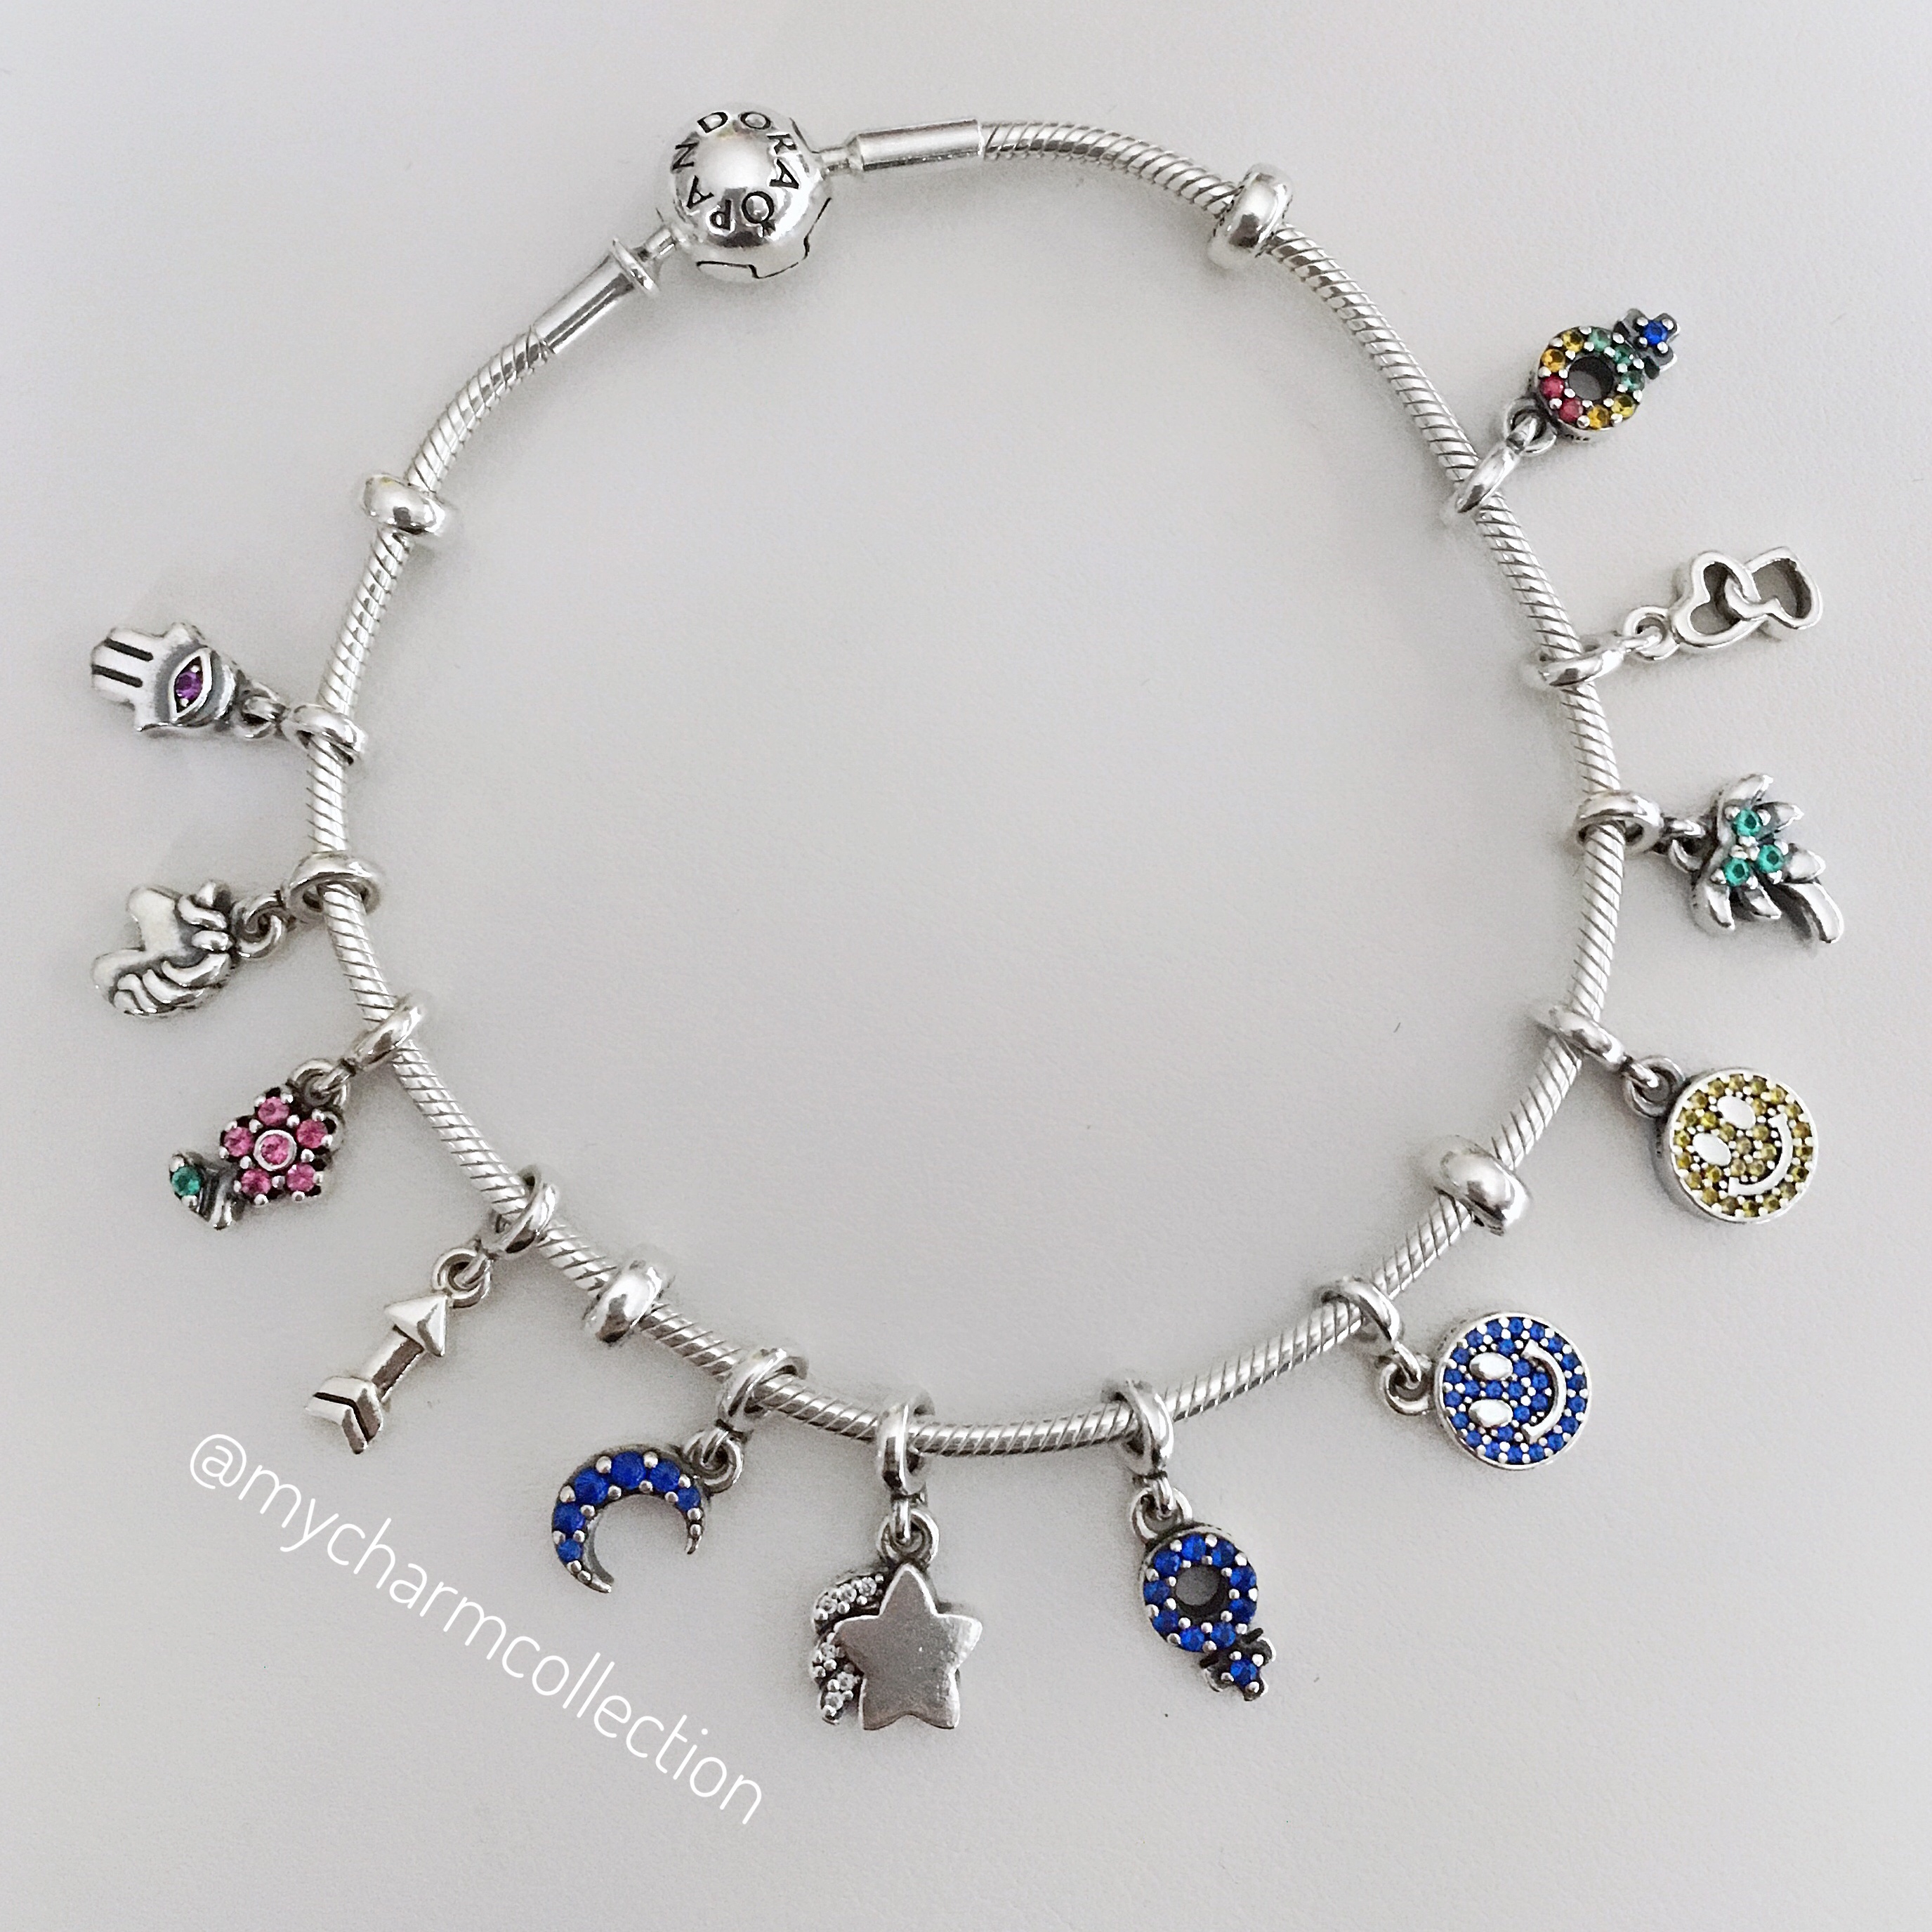 REVIEW: Pandora ME Link Chain Bracelets - The Art of Pandora